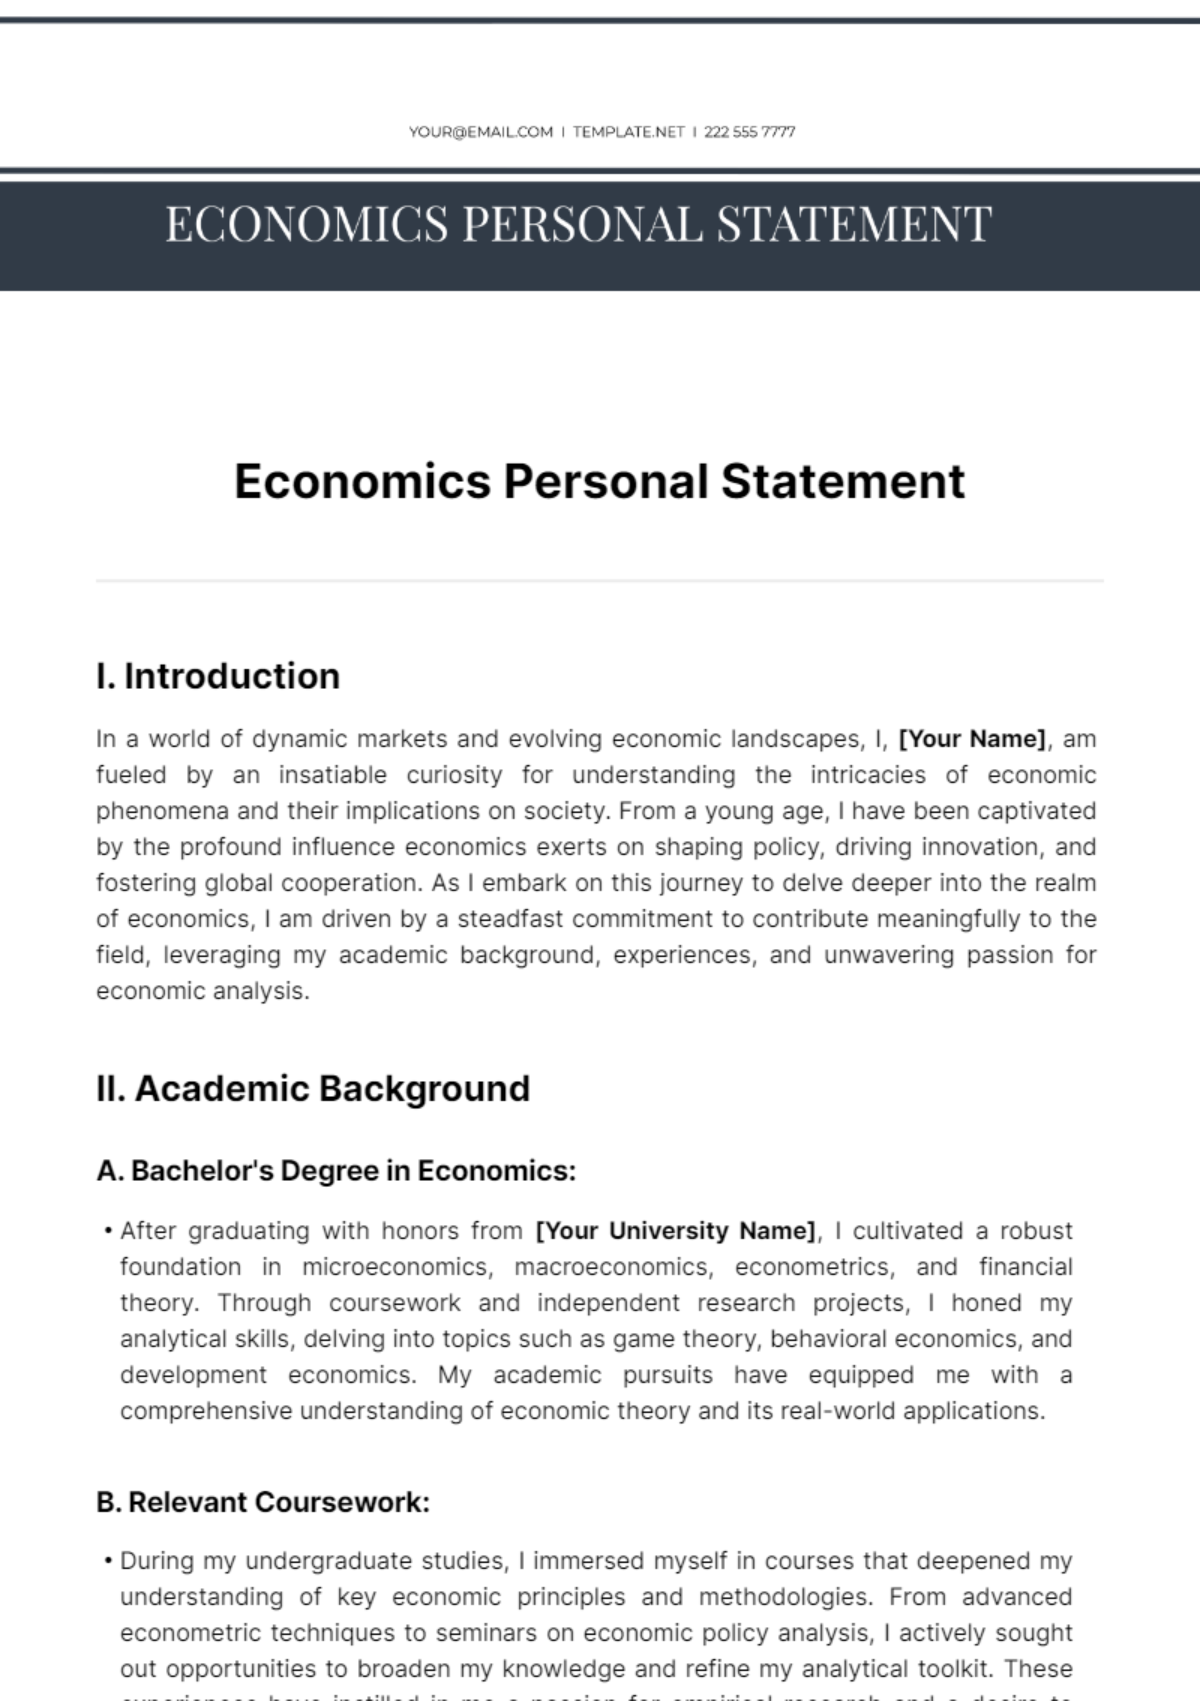 Economics Personal Statement Template